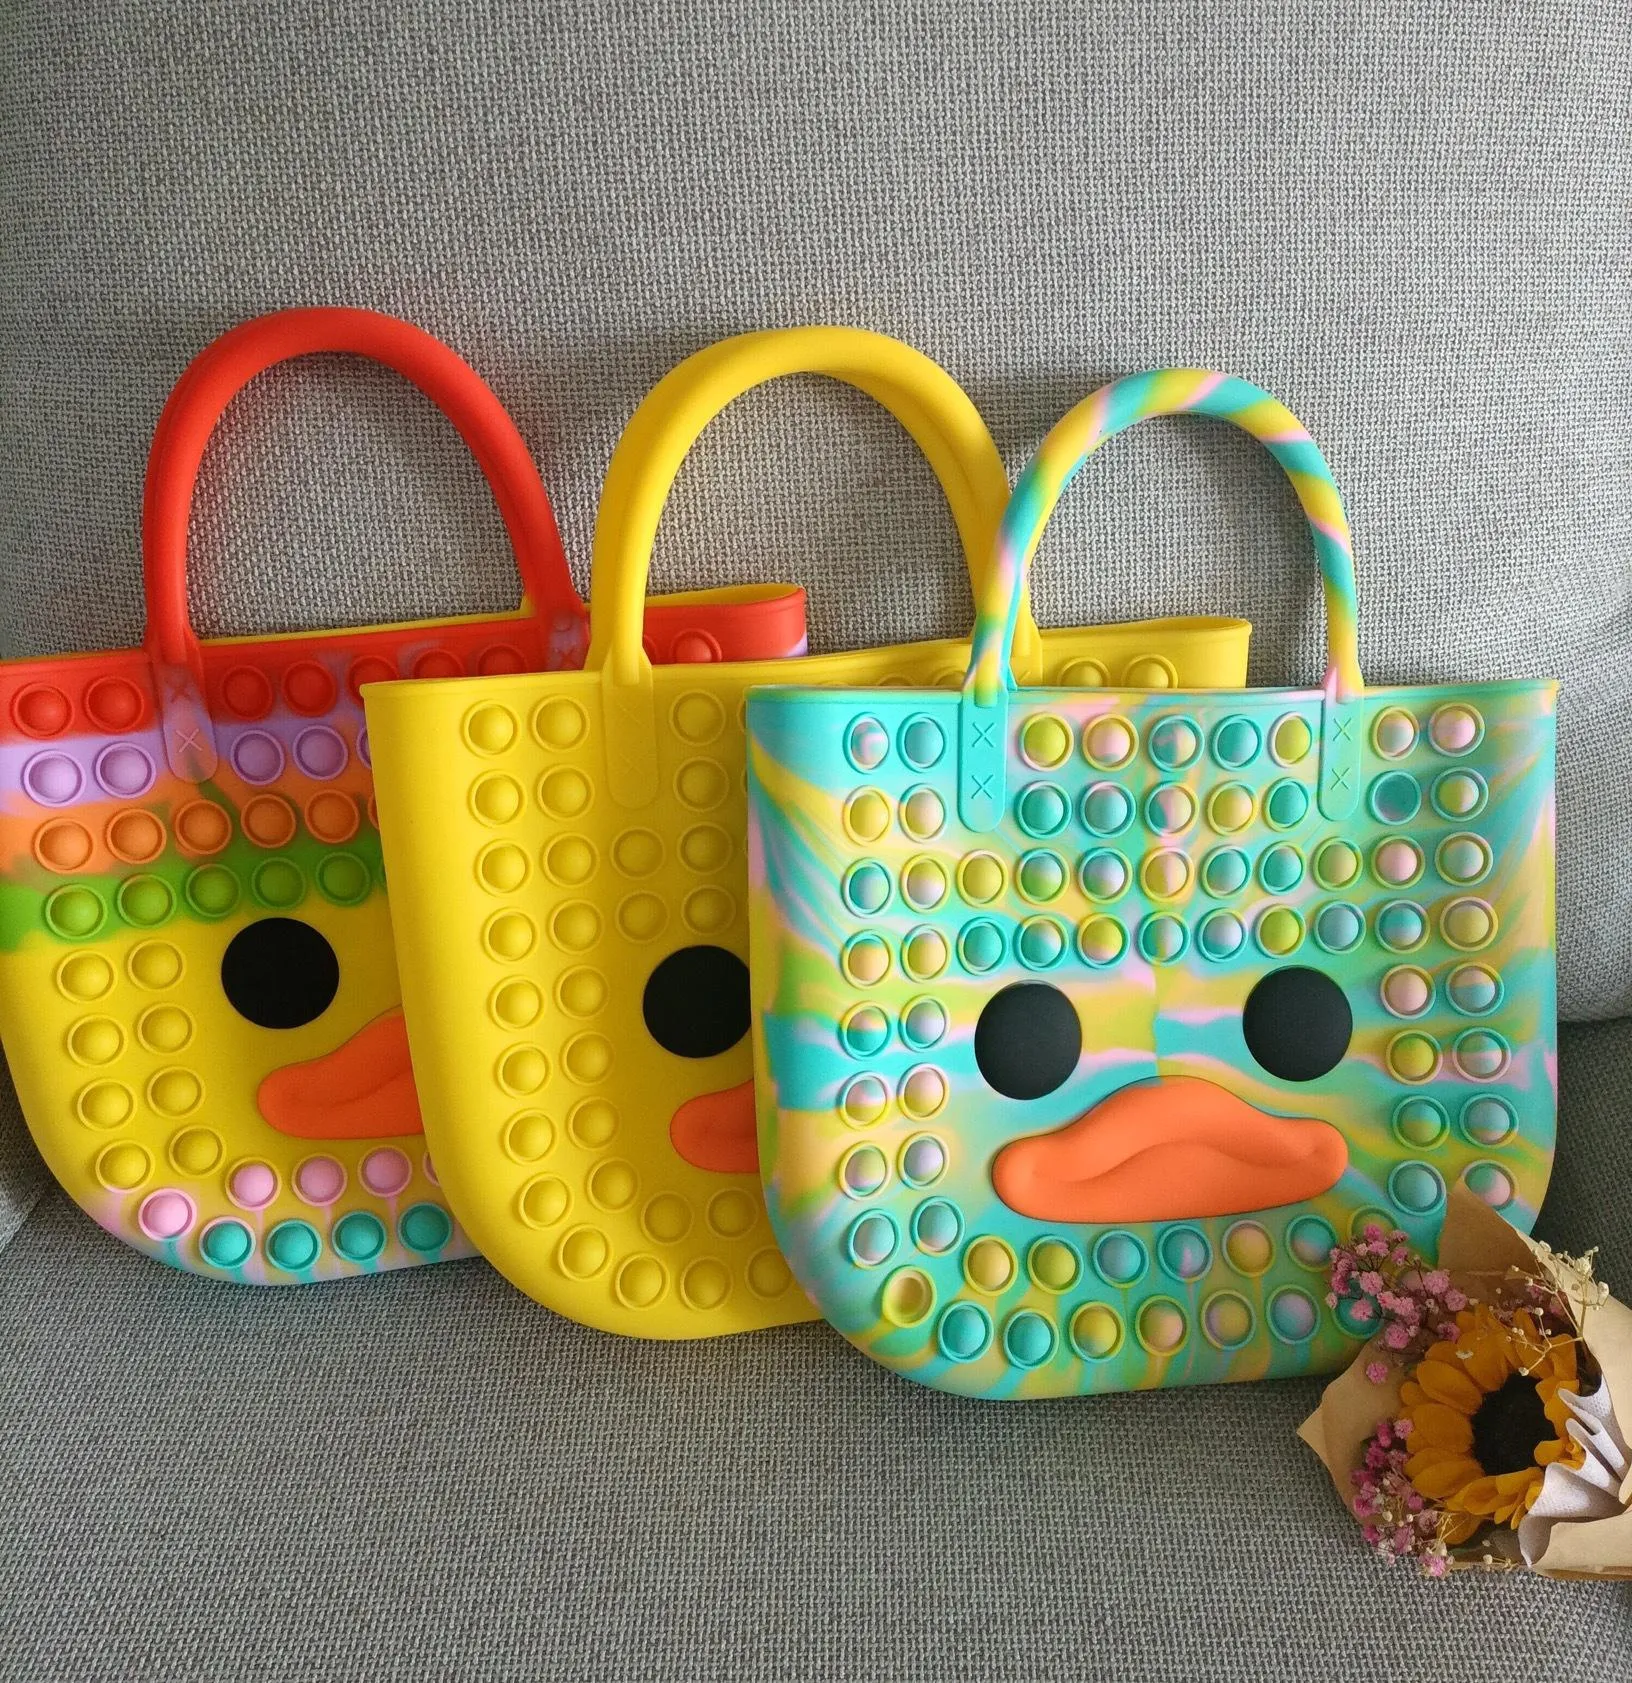 Moda linda bolsa fidget juguetes empuje burbuja estrés relevante arco iris Simpl Dimmer antiestress niños sensorial juguetes bolso bolso de mar HHB10365